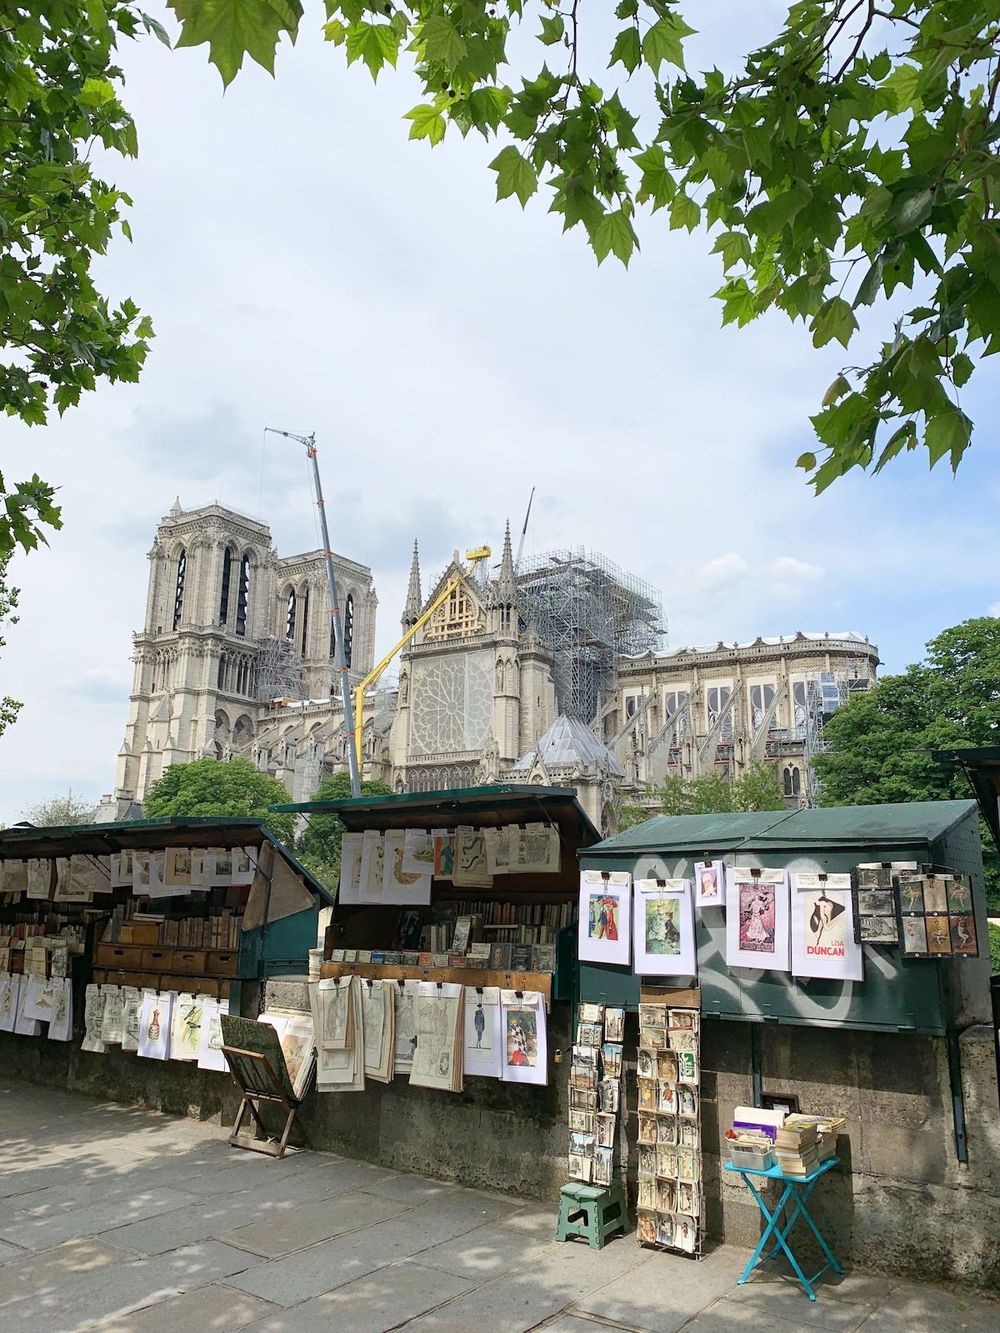 Repairs underway on the Notre Dame in Paris, May 2019